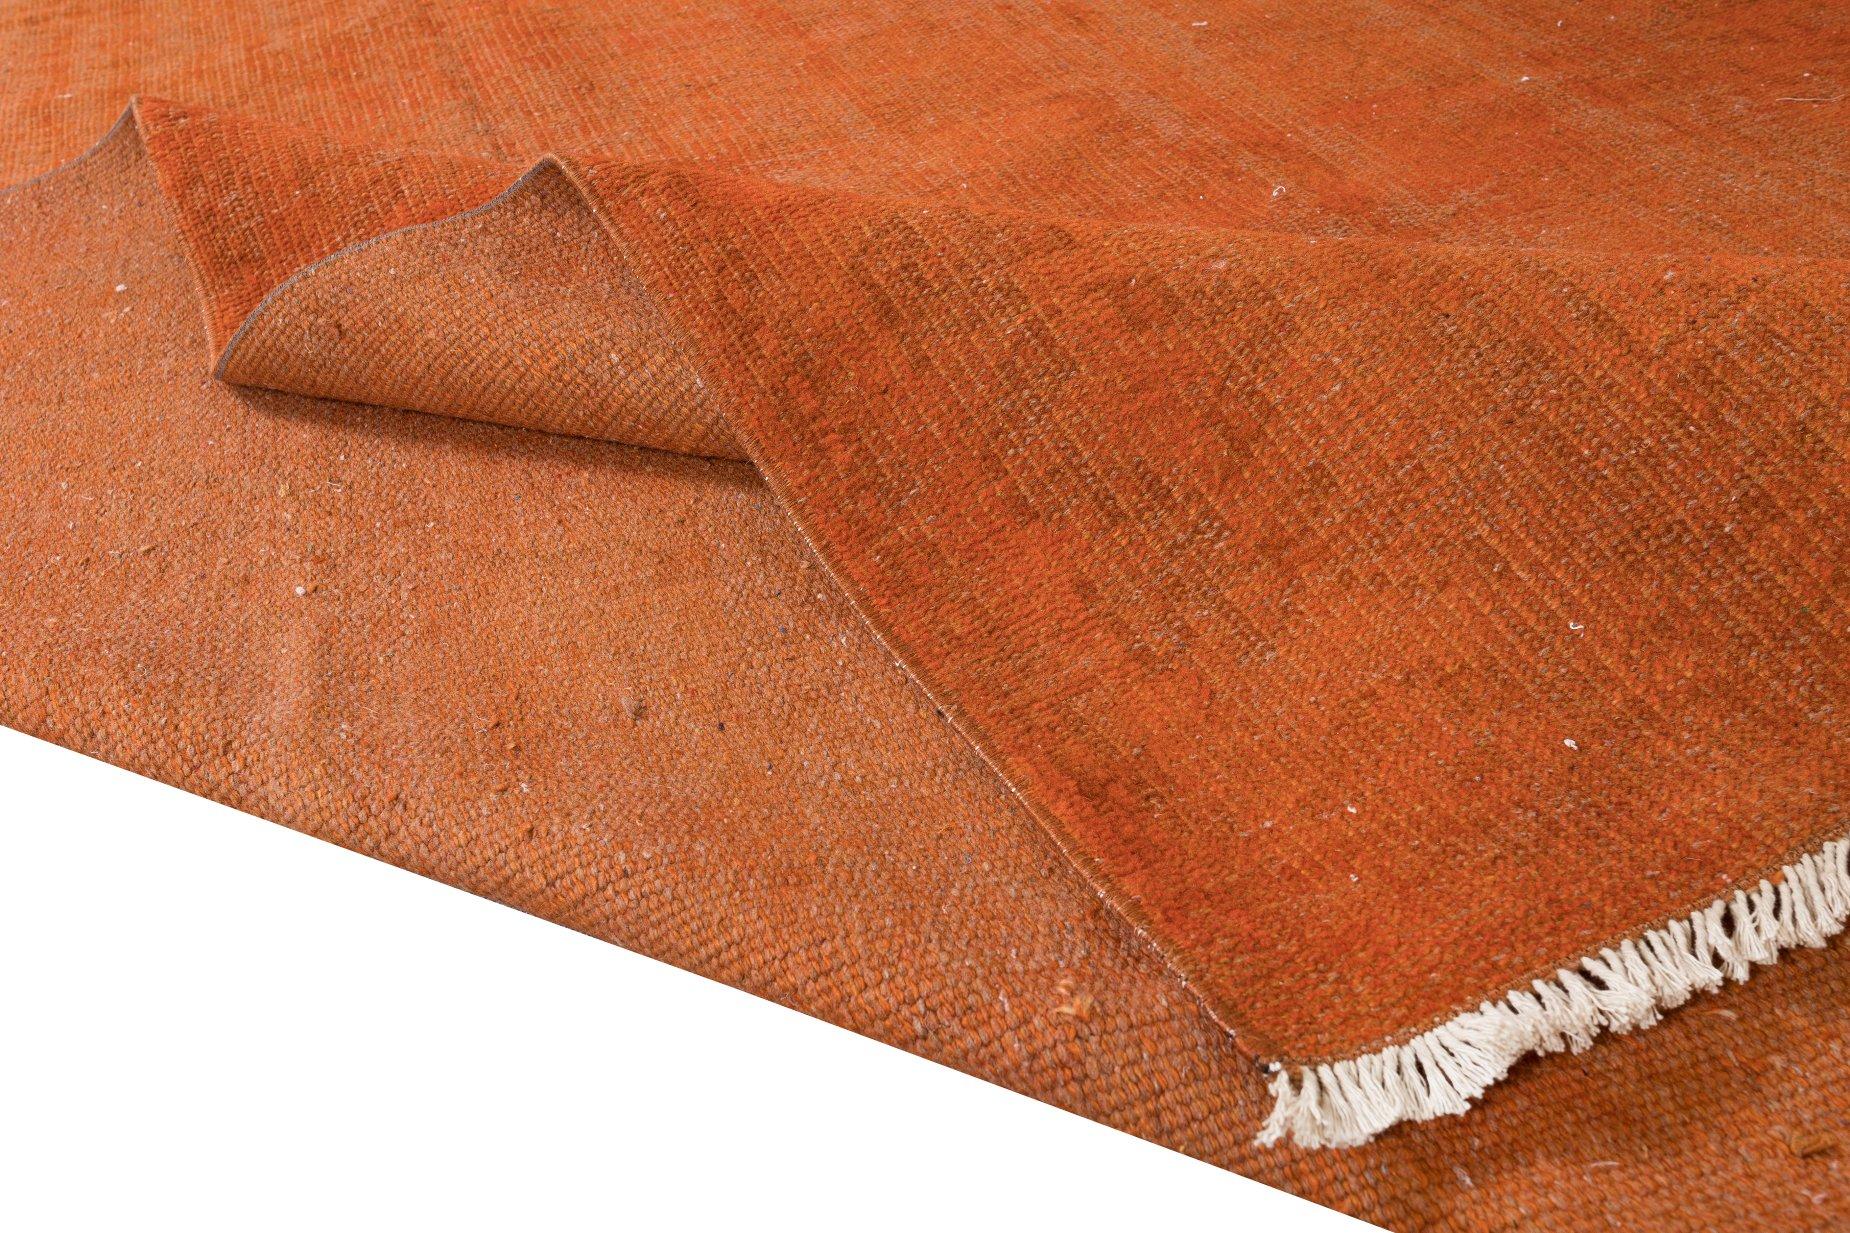 Hand-Woven 5.5x8.7 Ft Orange Area Rug, 1960s Turkish Handmade Carpet for Modern Interior